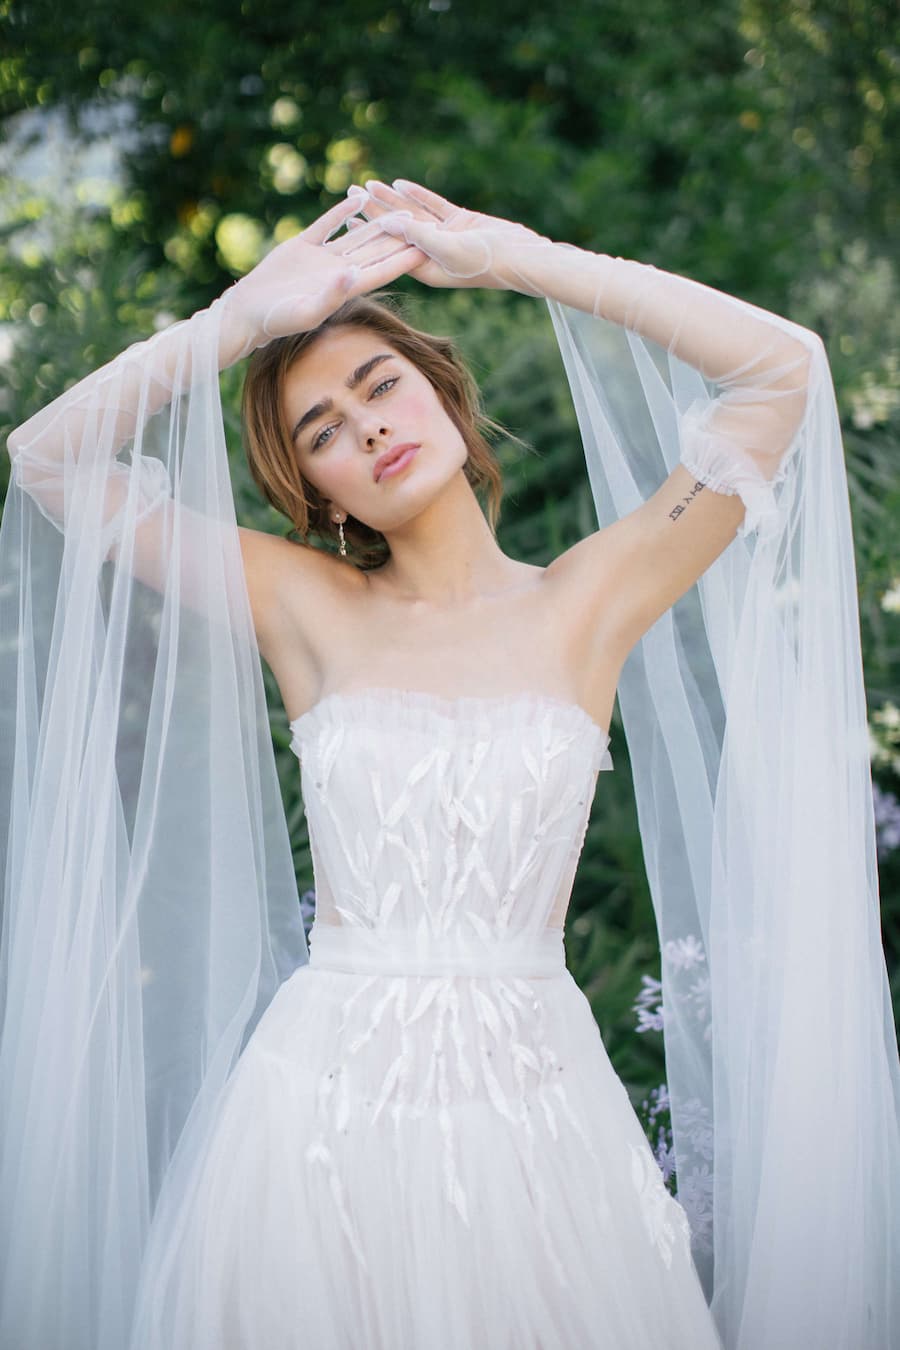 DIY Wedding Dress Alterations | Doing my own wedding dress fitting - YouTube